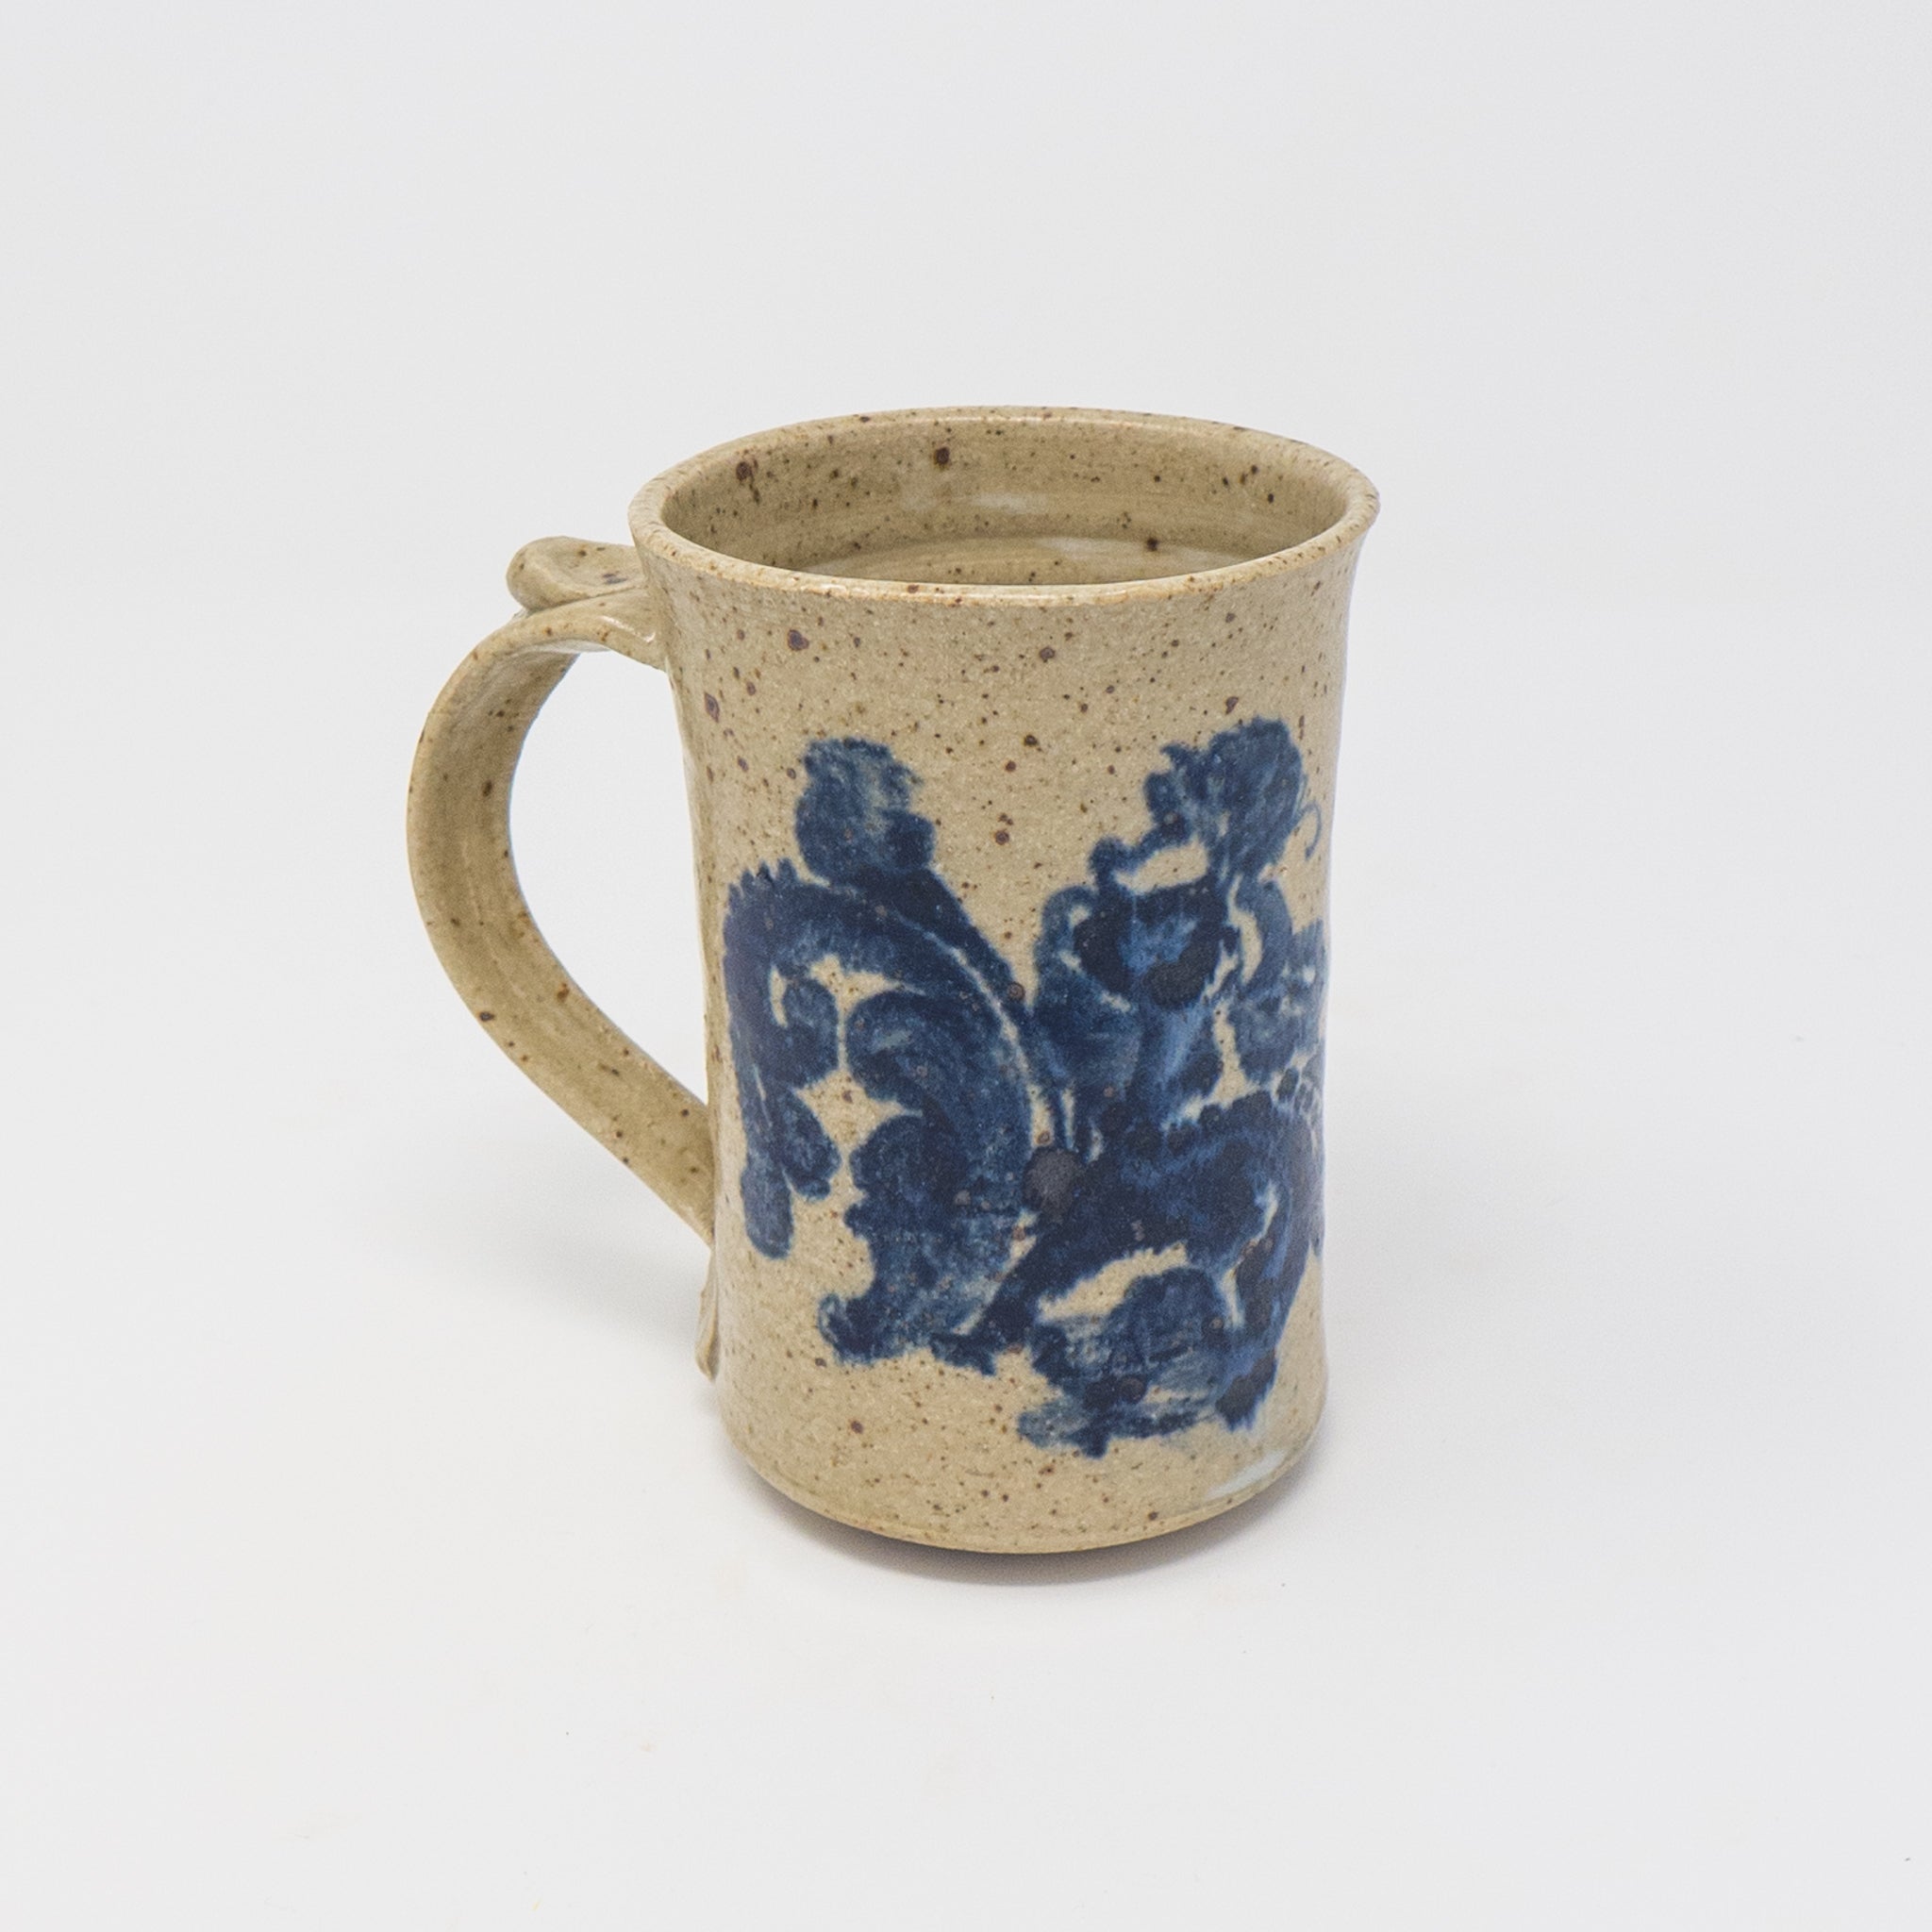 Tokheim Stoneware Rosemaled Mug in Oatmeal with True Blue Rosemaling